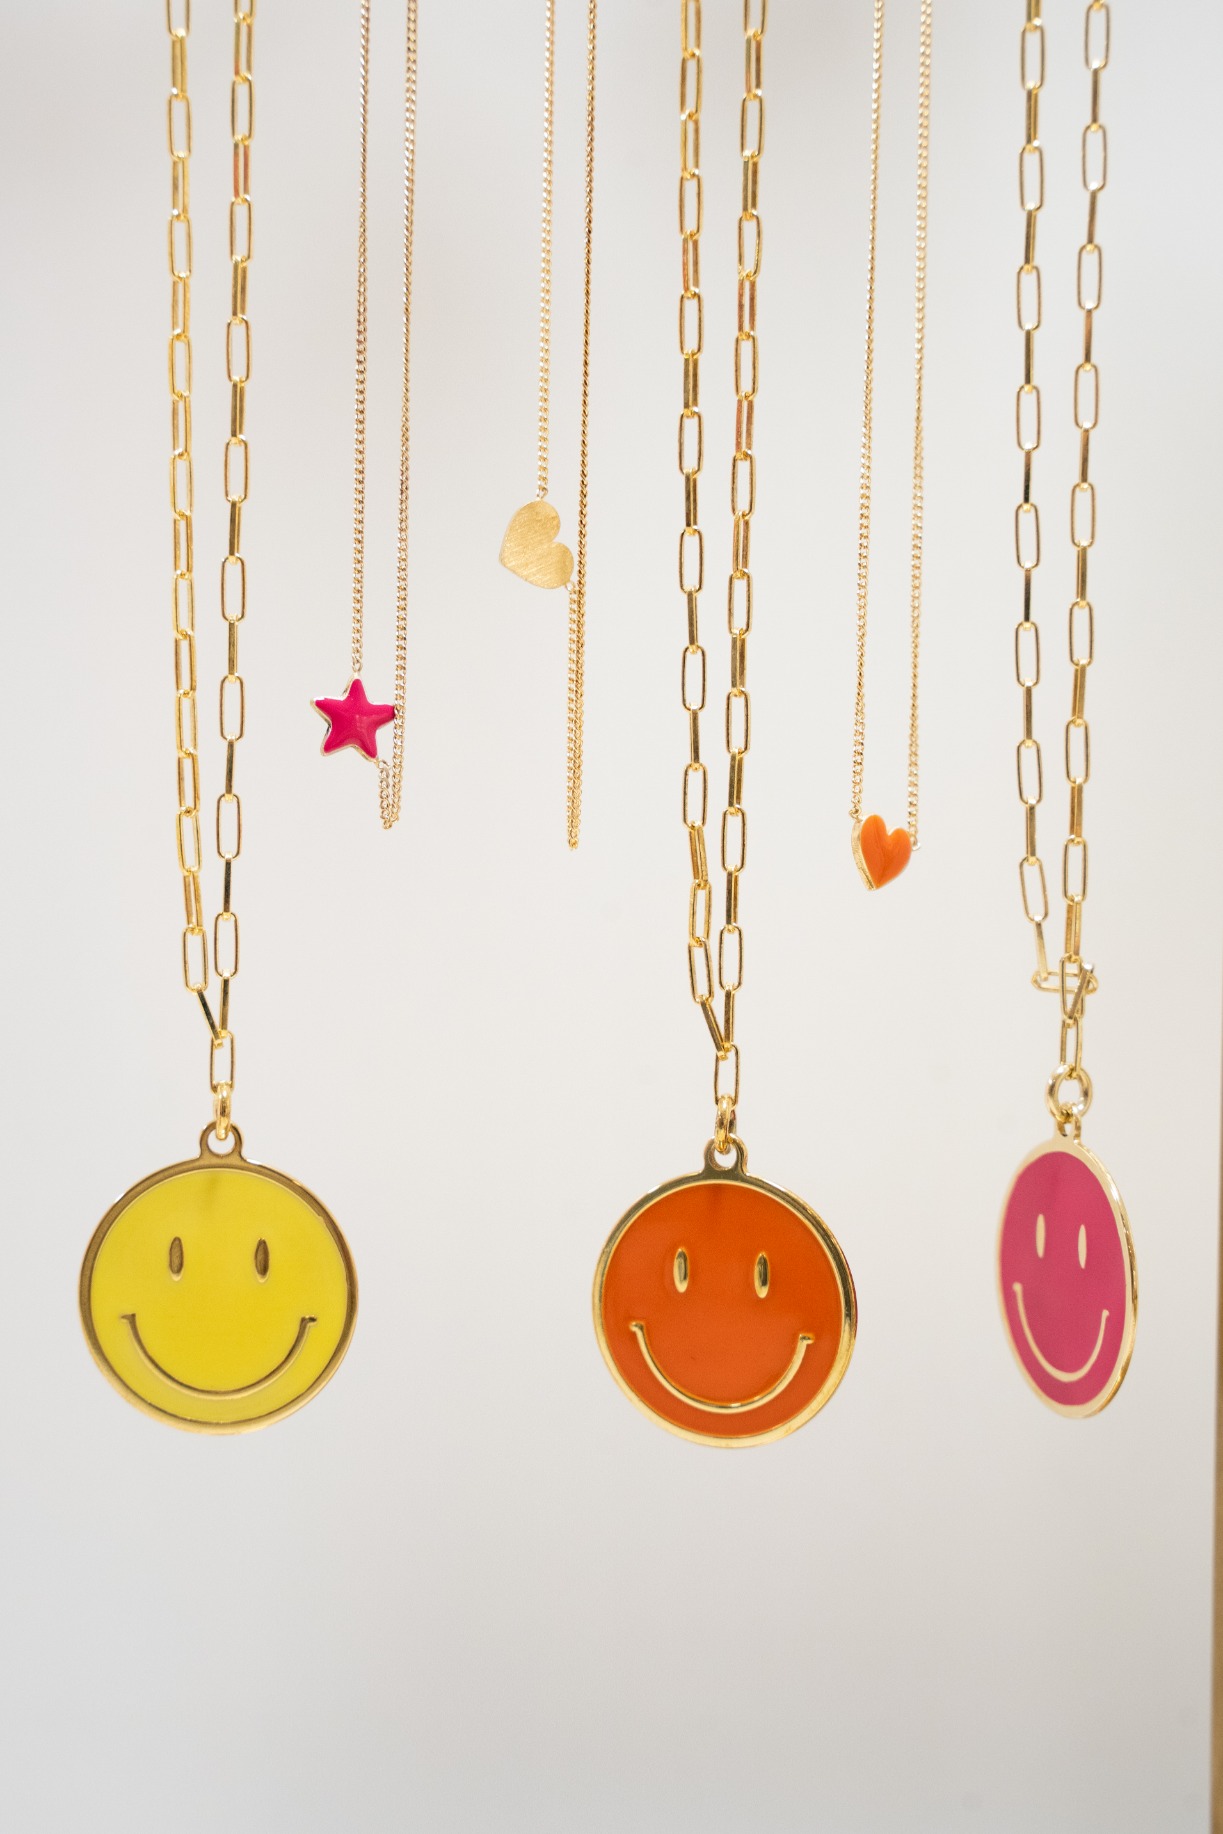 Smiley necklace enamel orangelott-theme.productDescriptionPage.SEO.byTheBrand